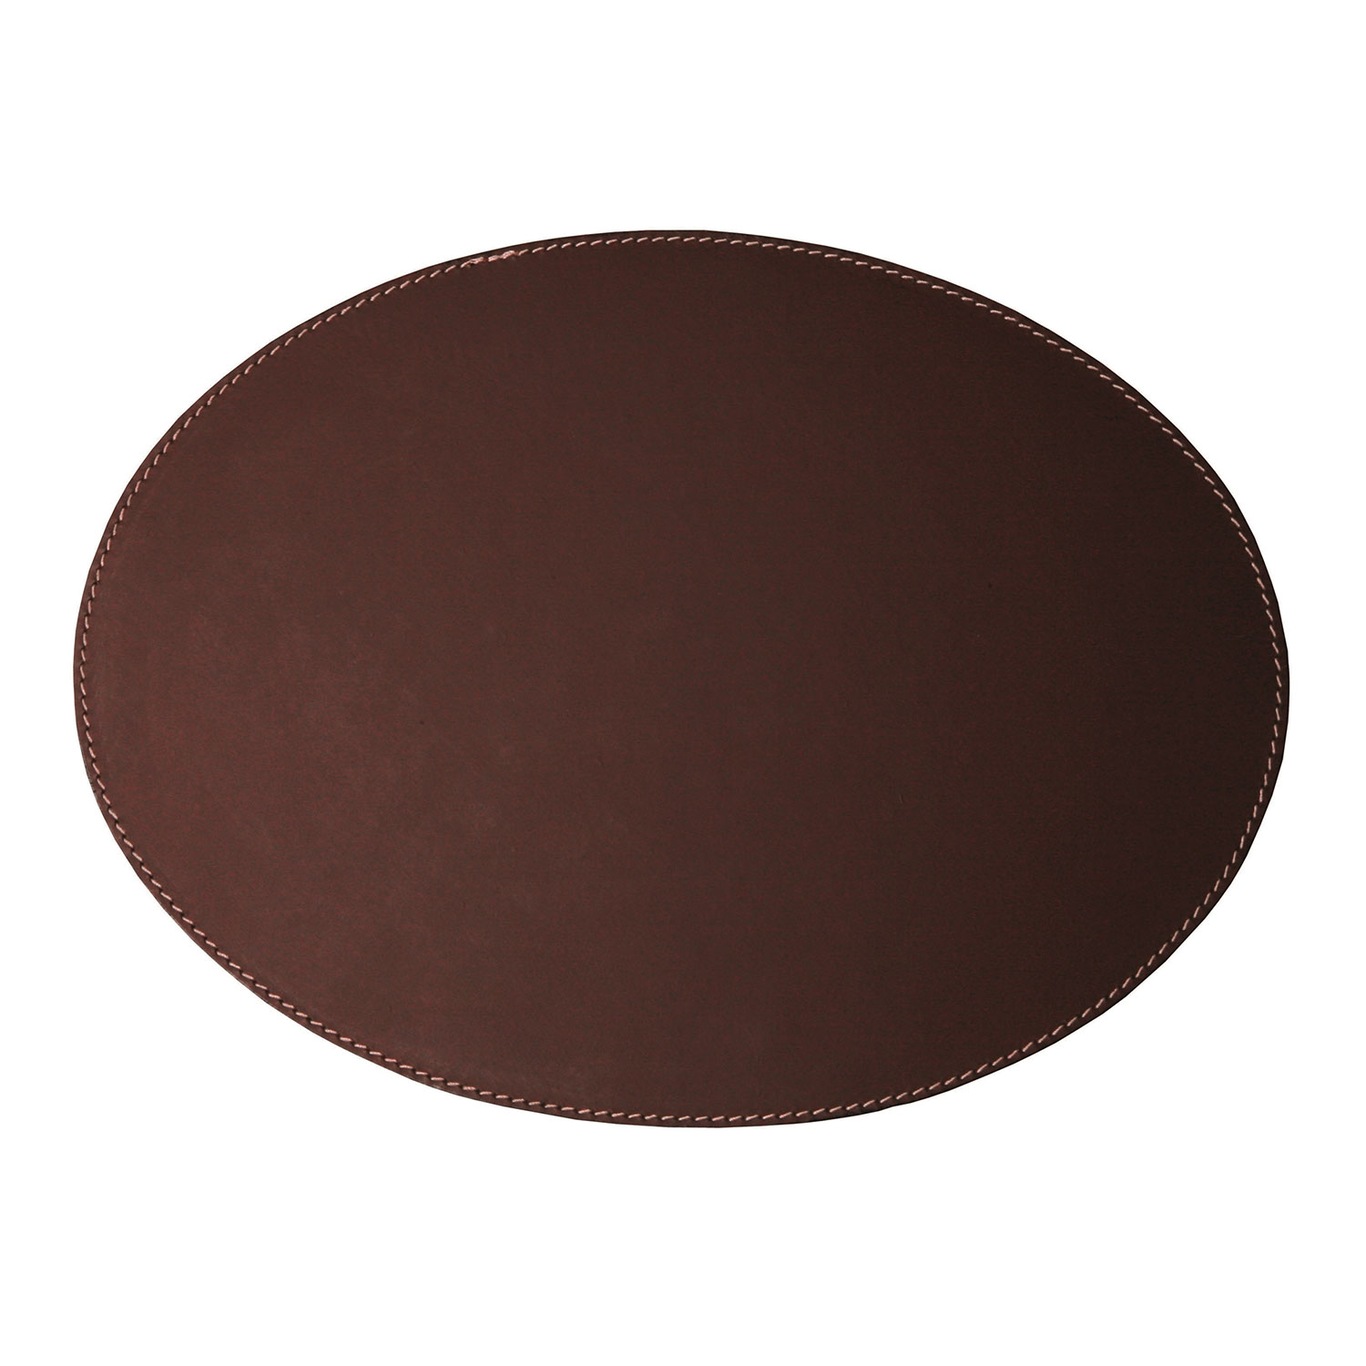 Dækkeserviet Oval 35x48cm, Chocolade